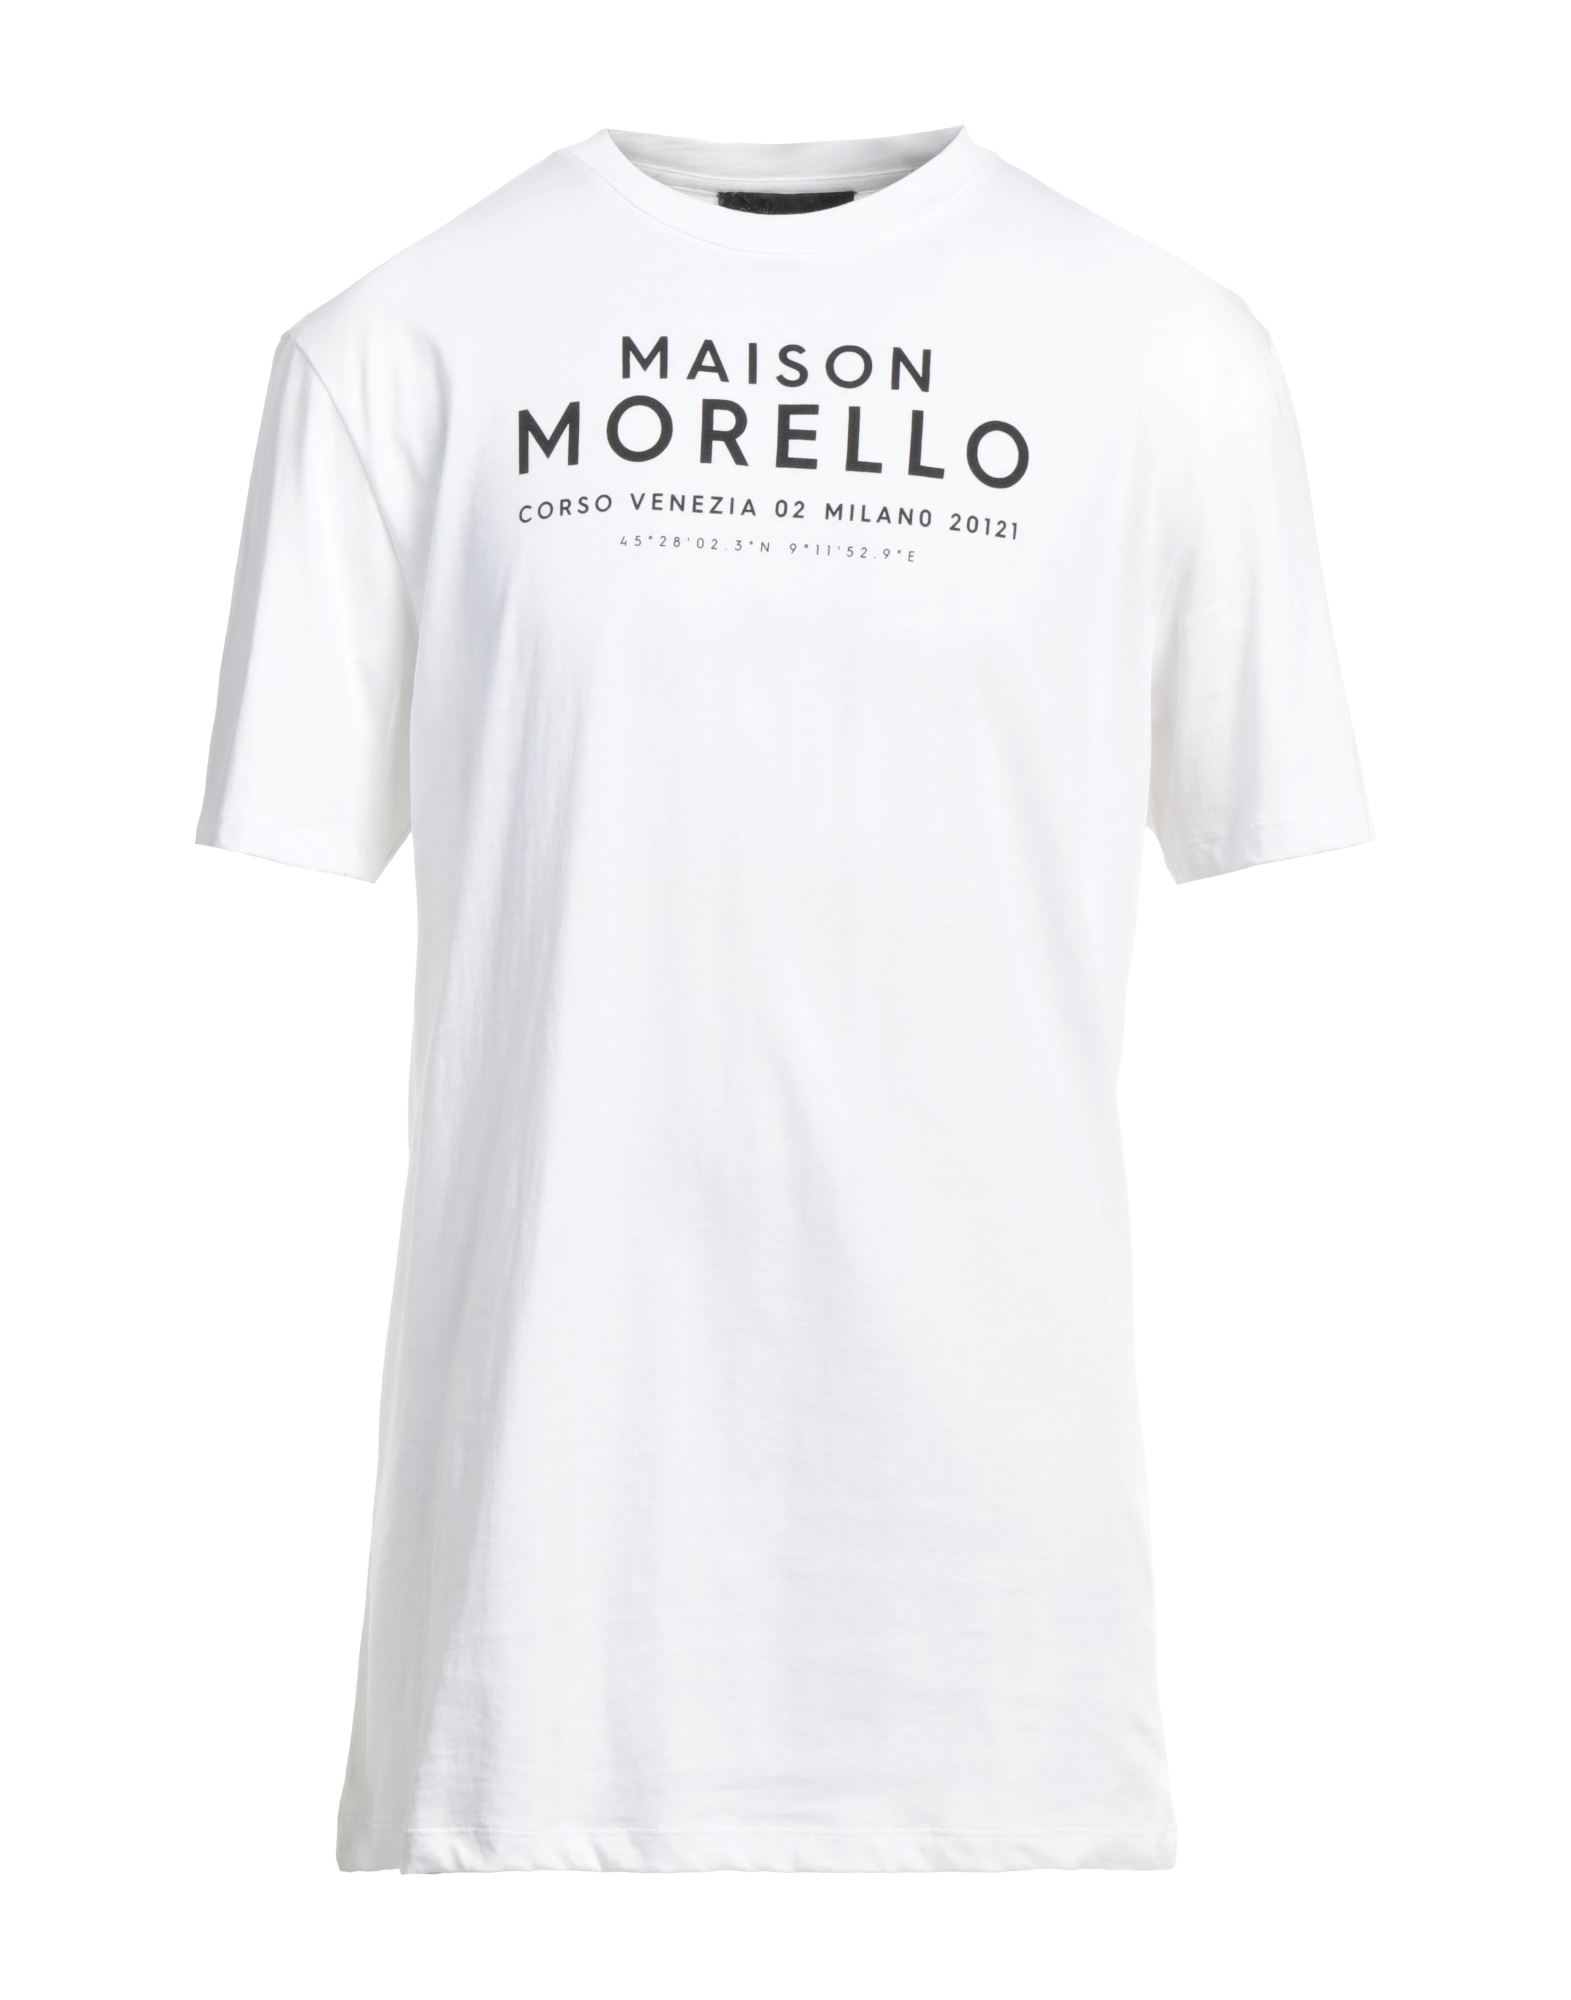 Frankie Morello T-shirts In White